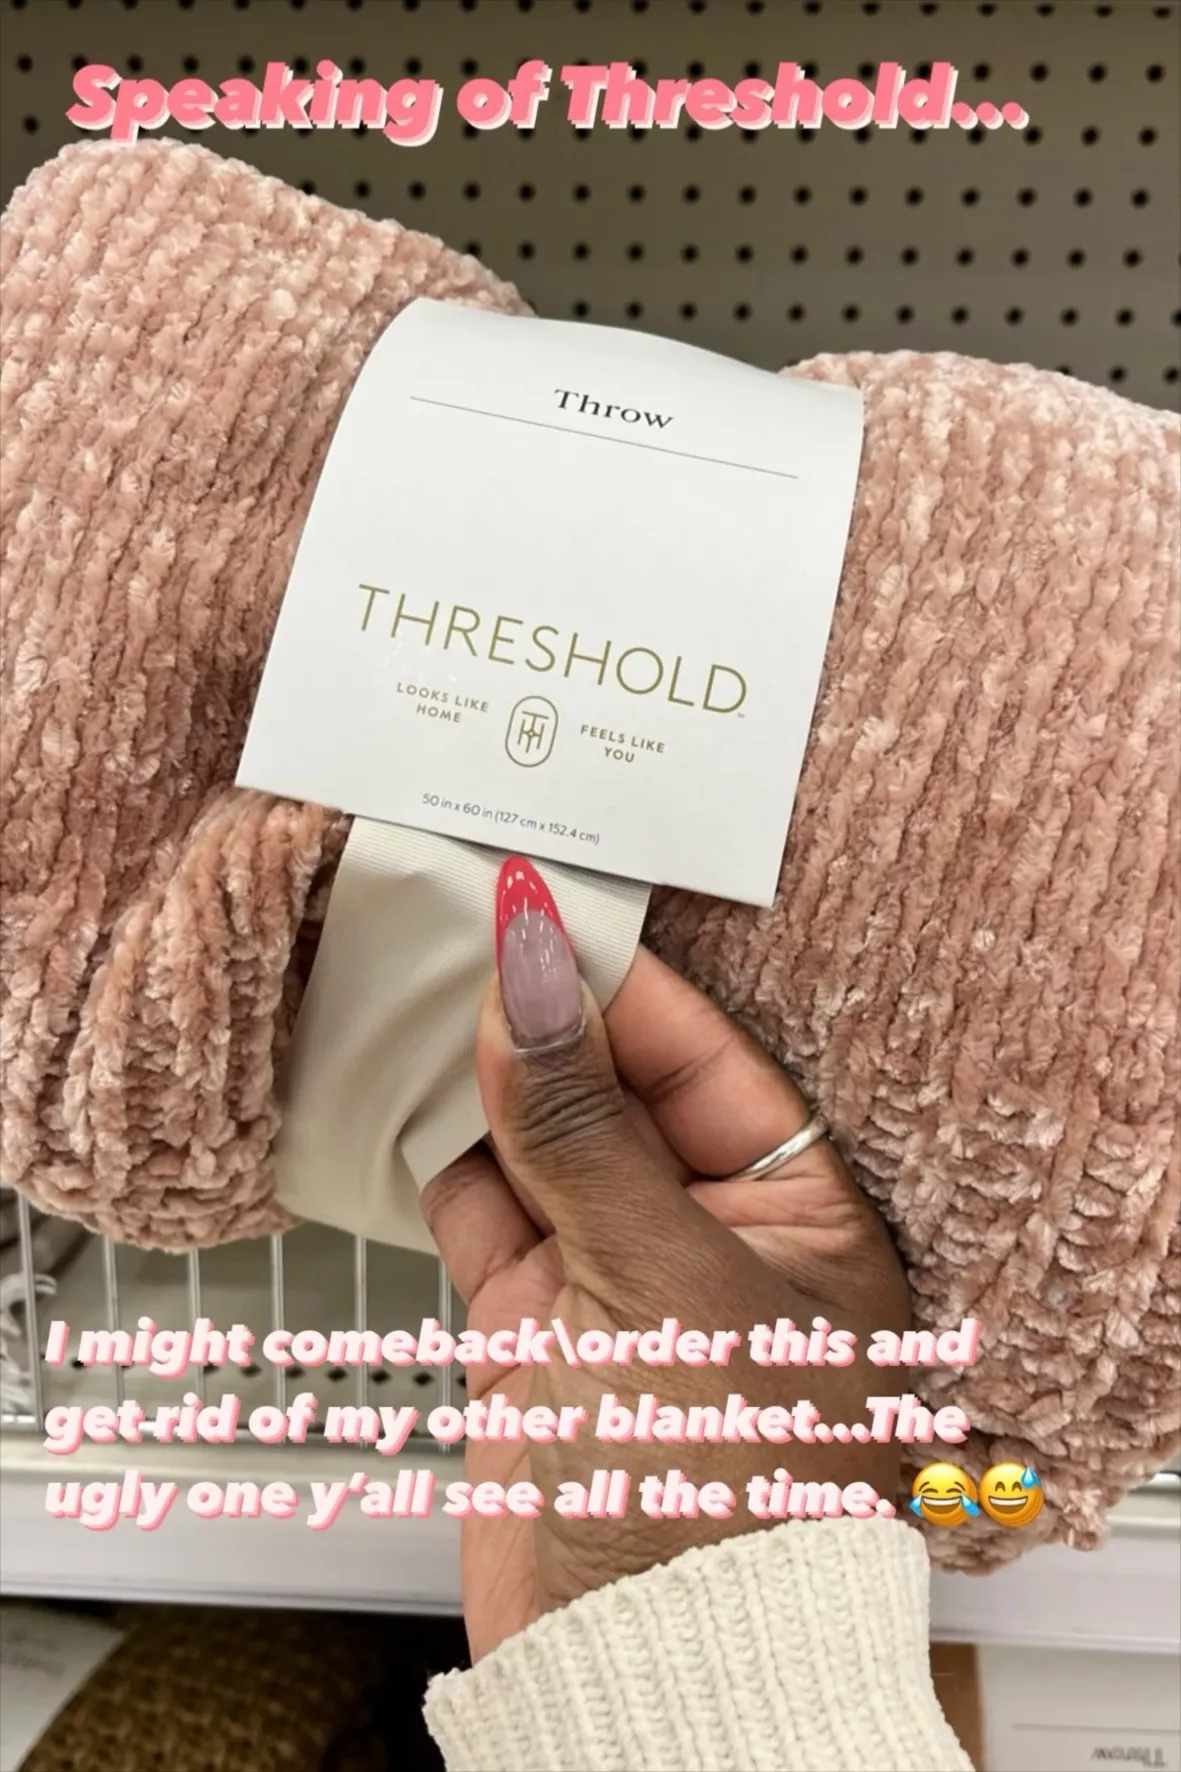 Cozy Knit Throw Blanket Neutral - Threshold™